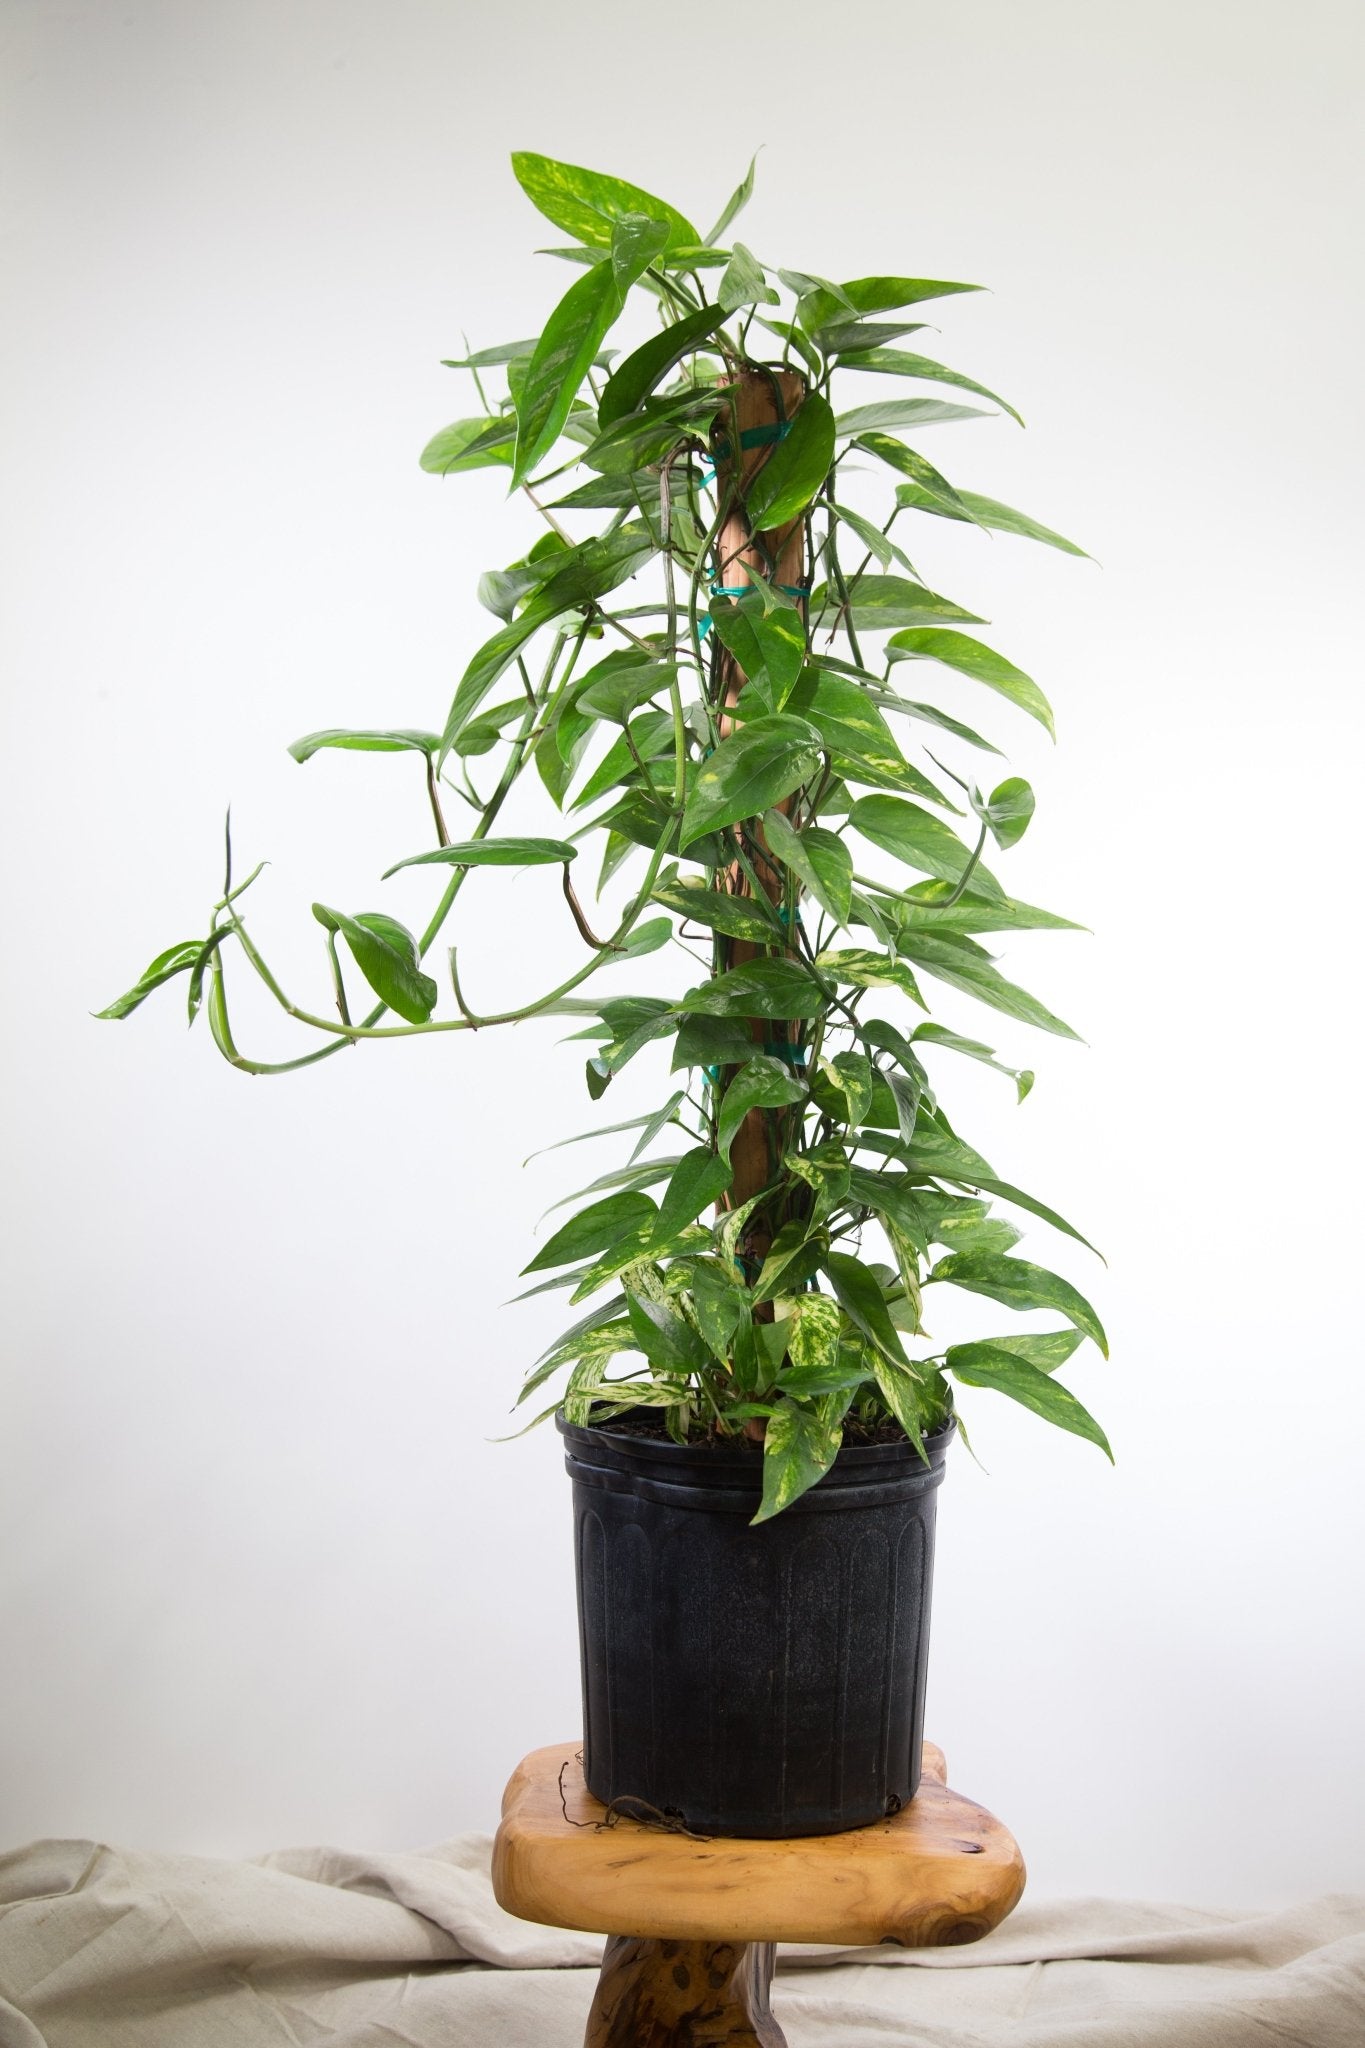 Epipremnum pinnatum 'Gold Flame' - In-Store Exclusive